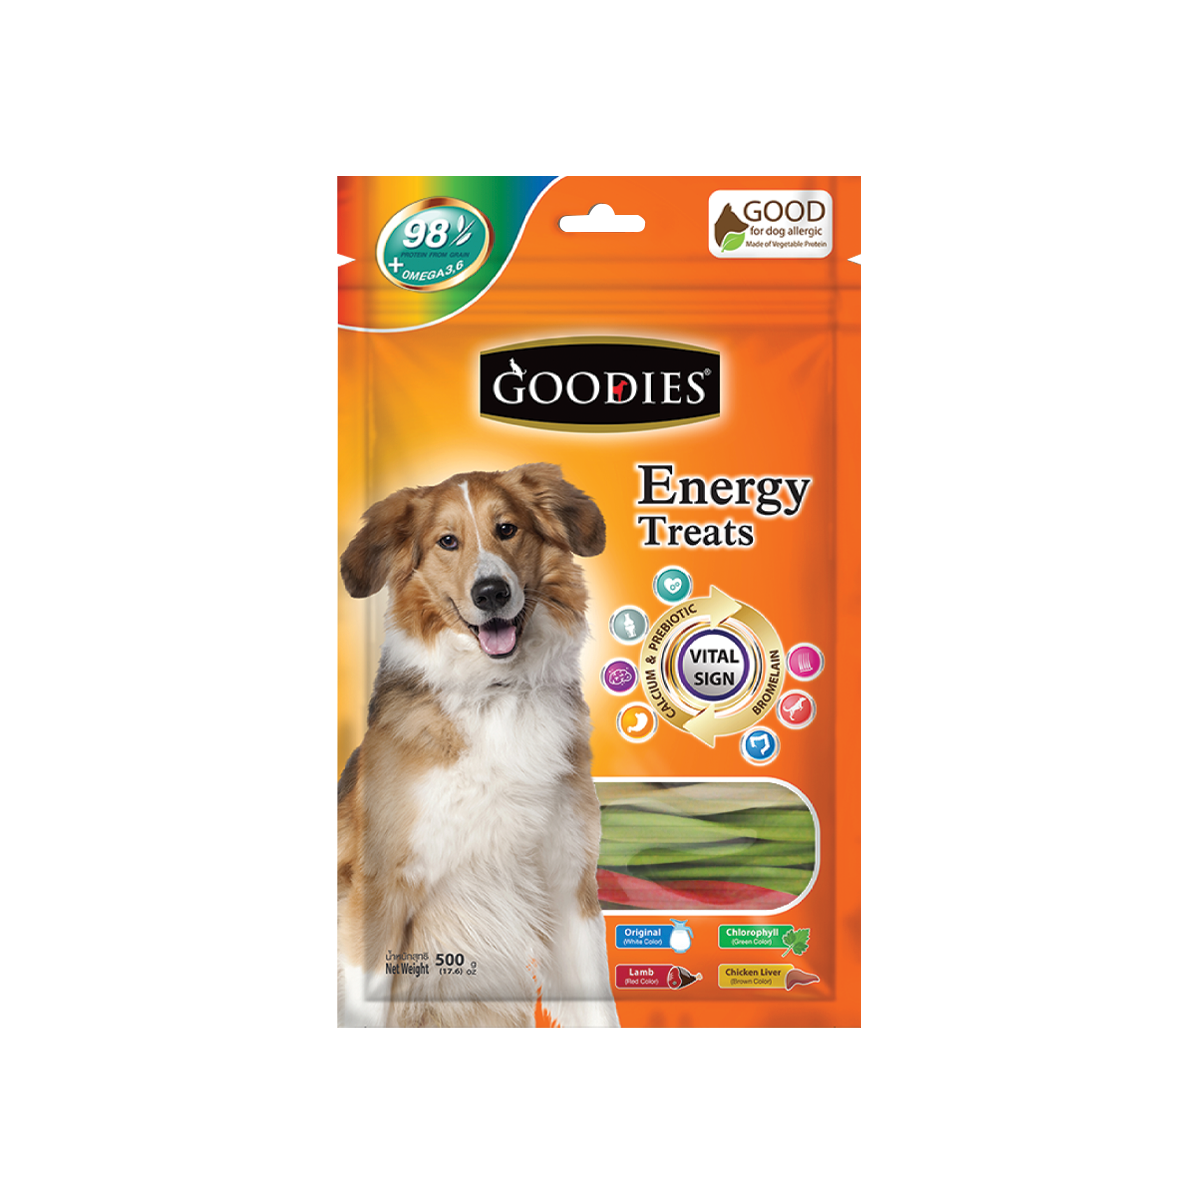 Goodies Energy Treats Dog Snack Triple Twist กู้ดดี้ อิเนอร์จี้ทรีต ขนมสำหรับสุนัข แท่งเปีย ขนาด 500 กรัม